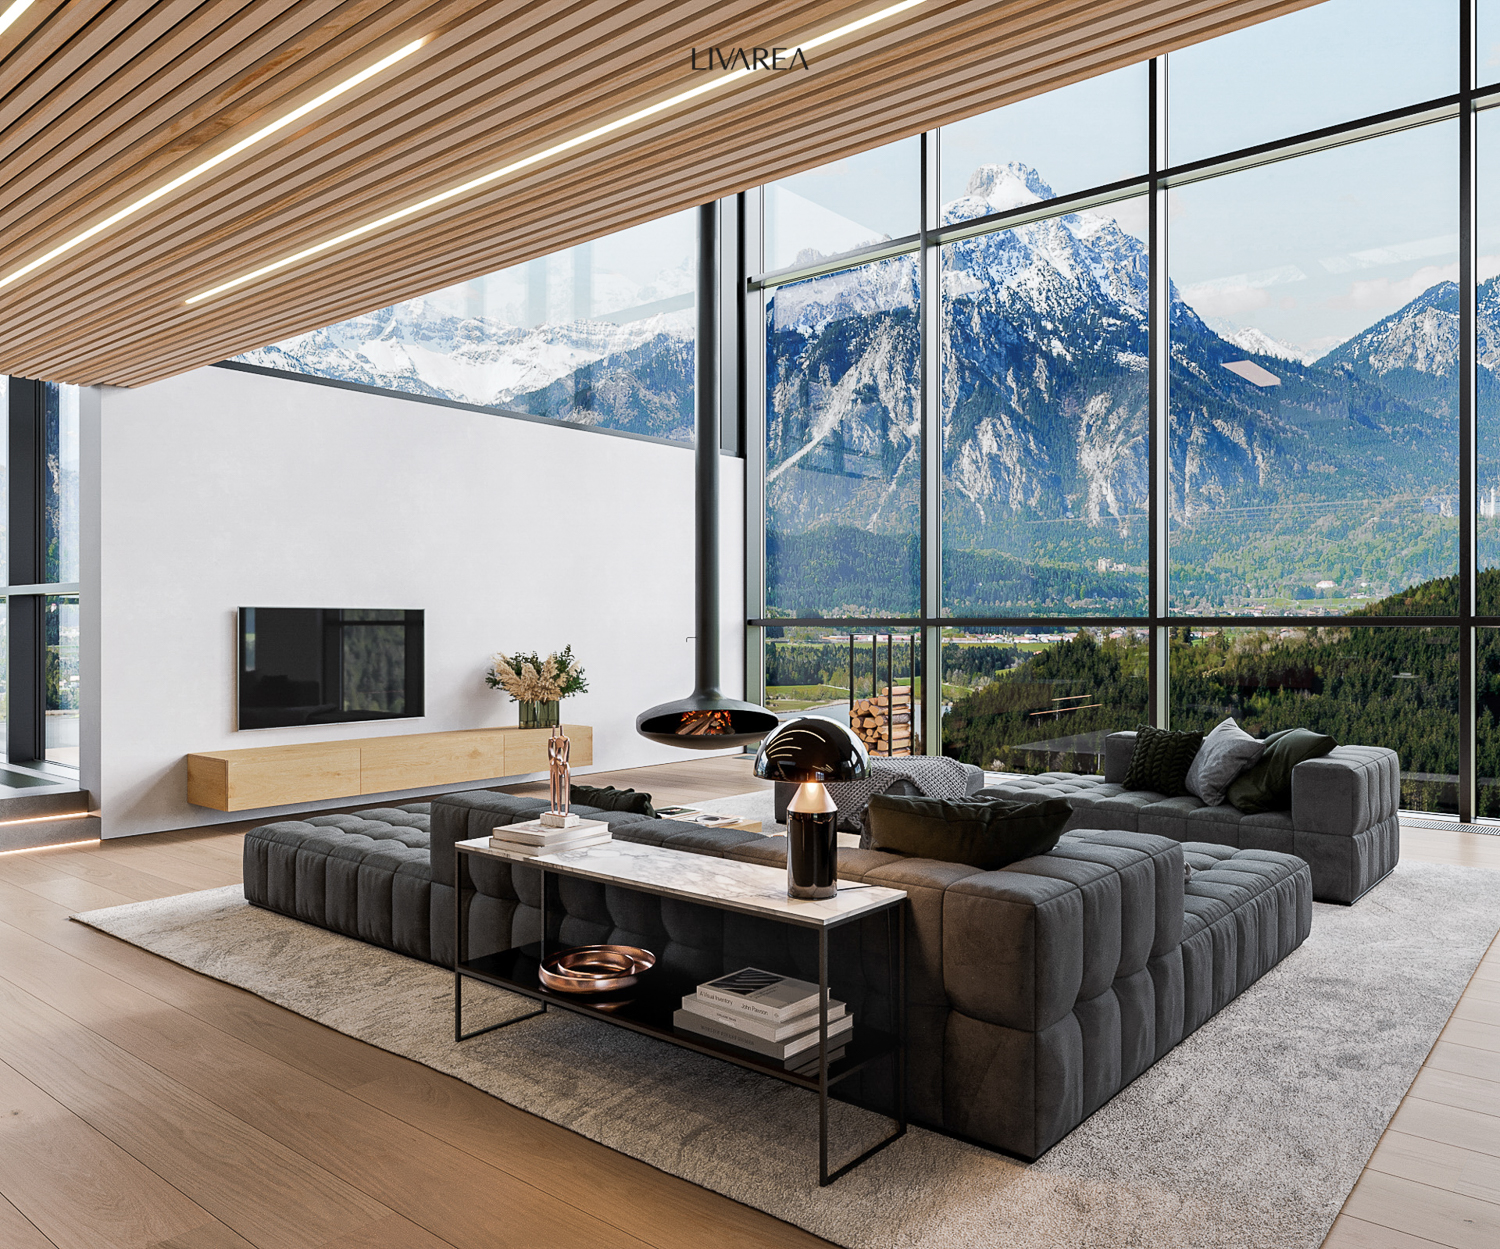 Moderne luxe villa met design woonkamer bank landschap grote bank lowboard hout wand console room divider